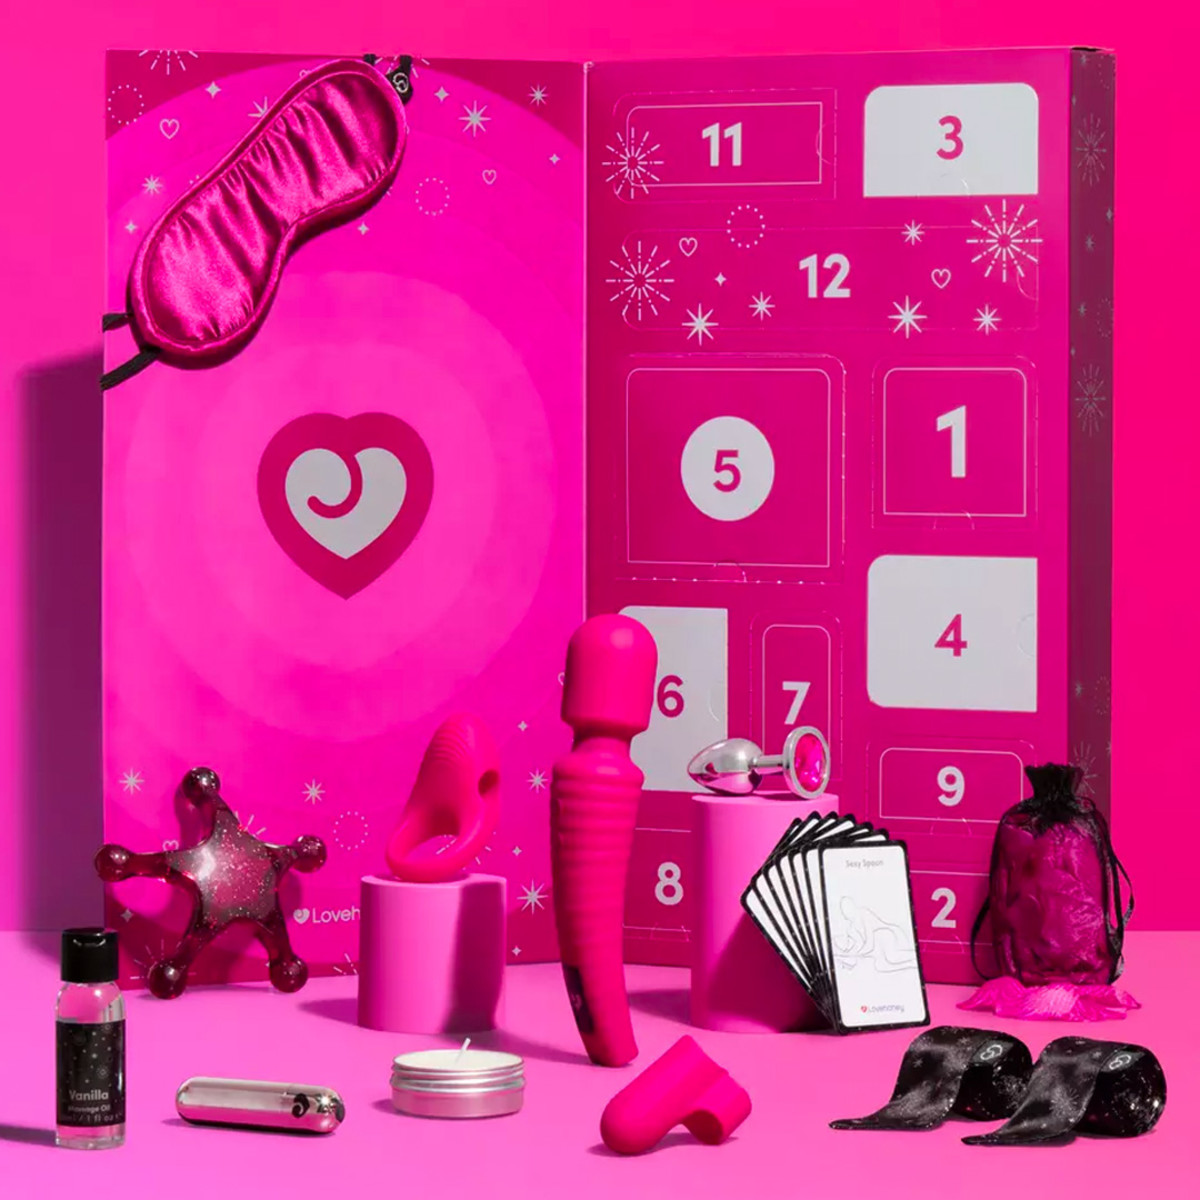 Lovehoney Advent Calendars: A Gift for the Naughty & Nice - Men's Journal